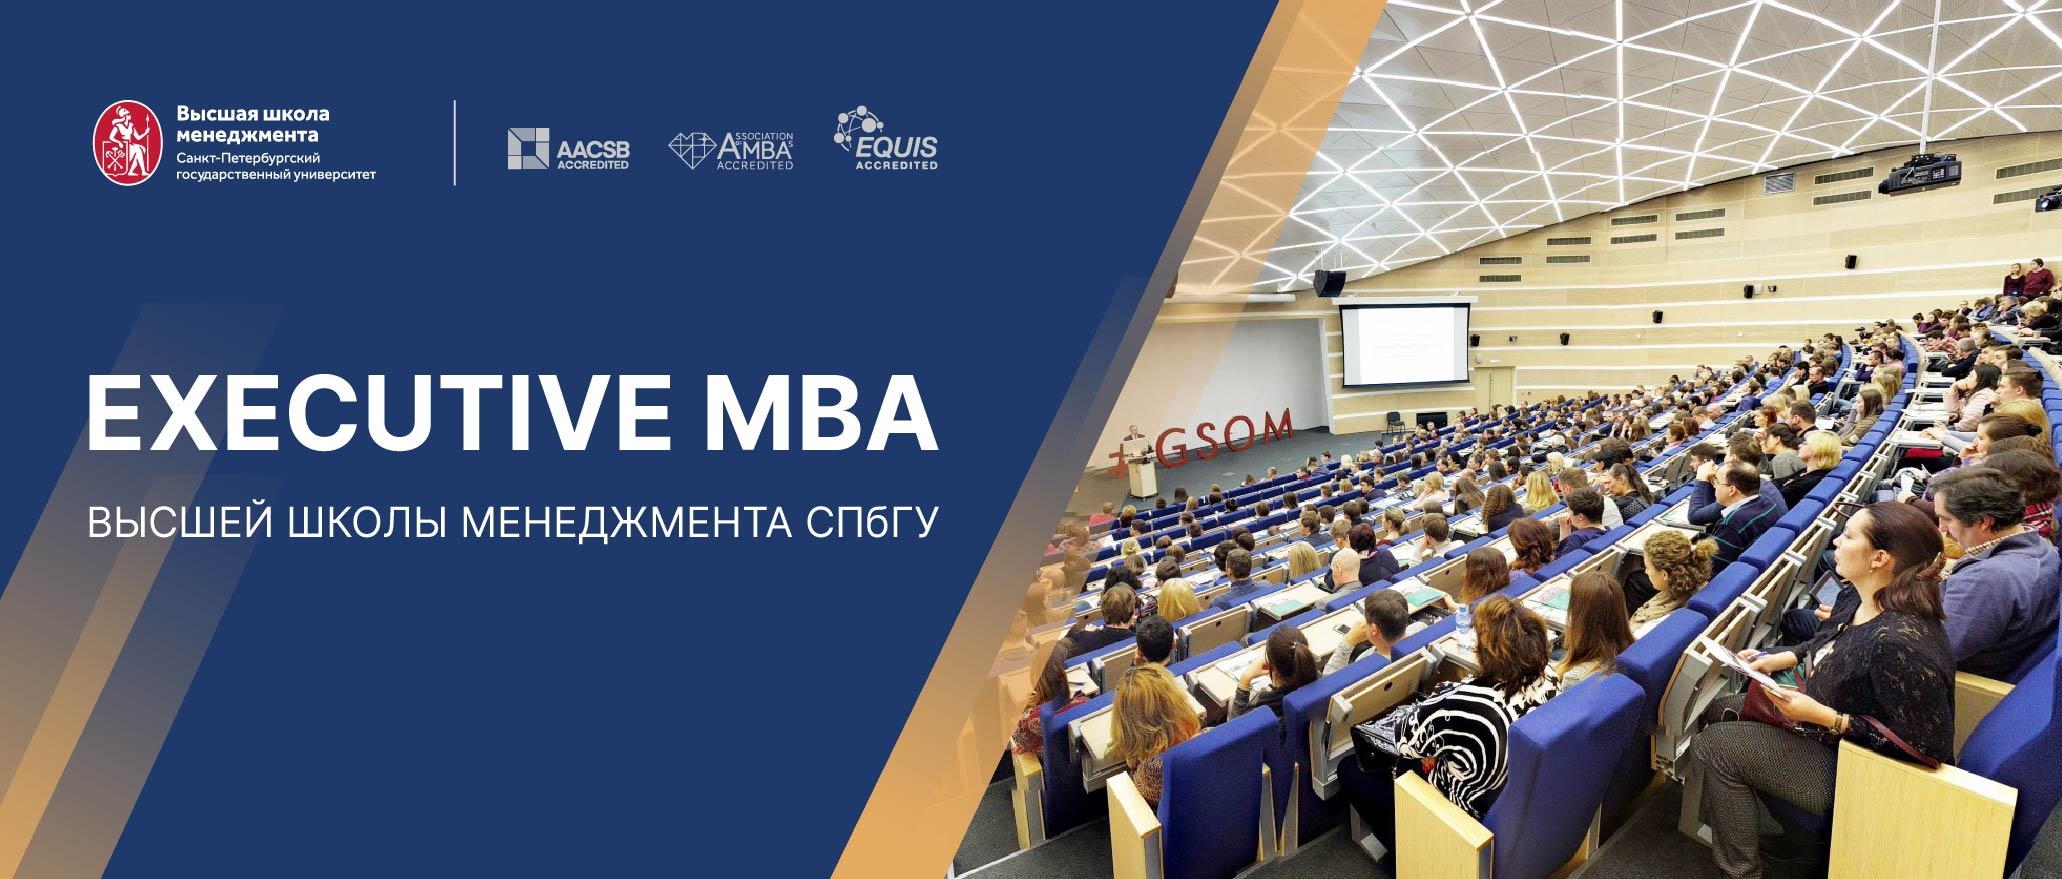 Executive MBA/MBA